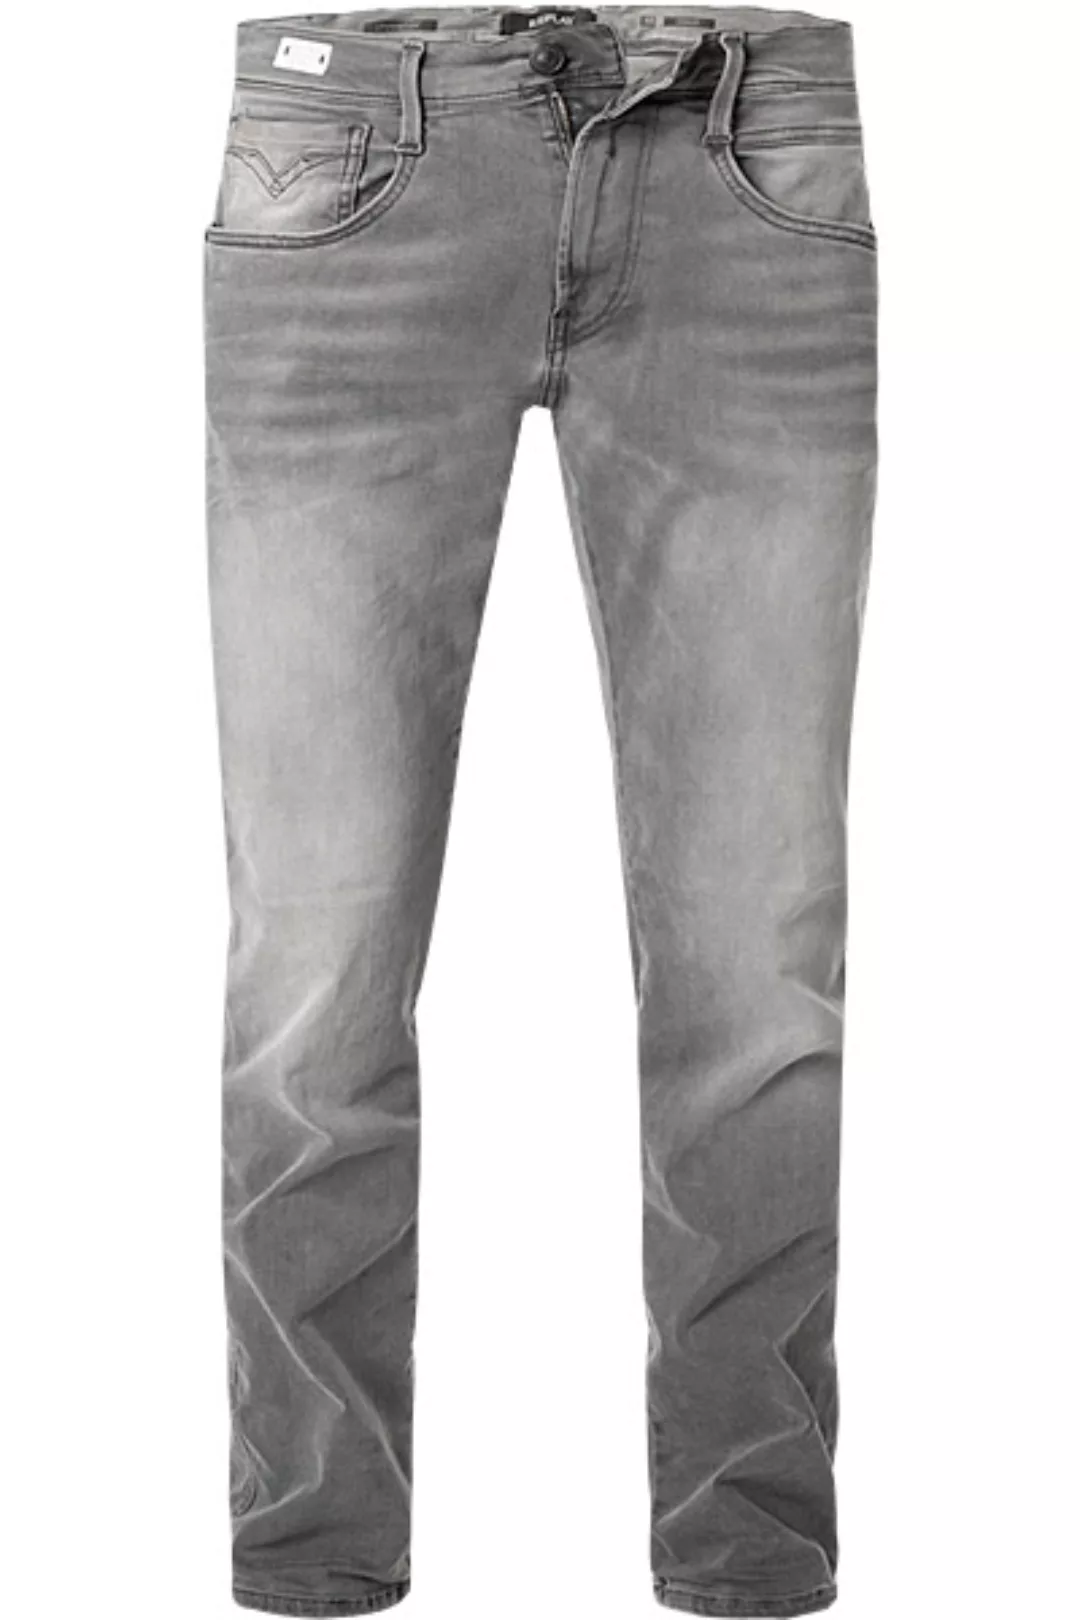 Replay M914y Anbass Jeans 30 Medium Grey günstig online kaufen